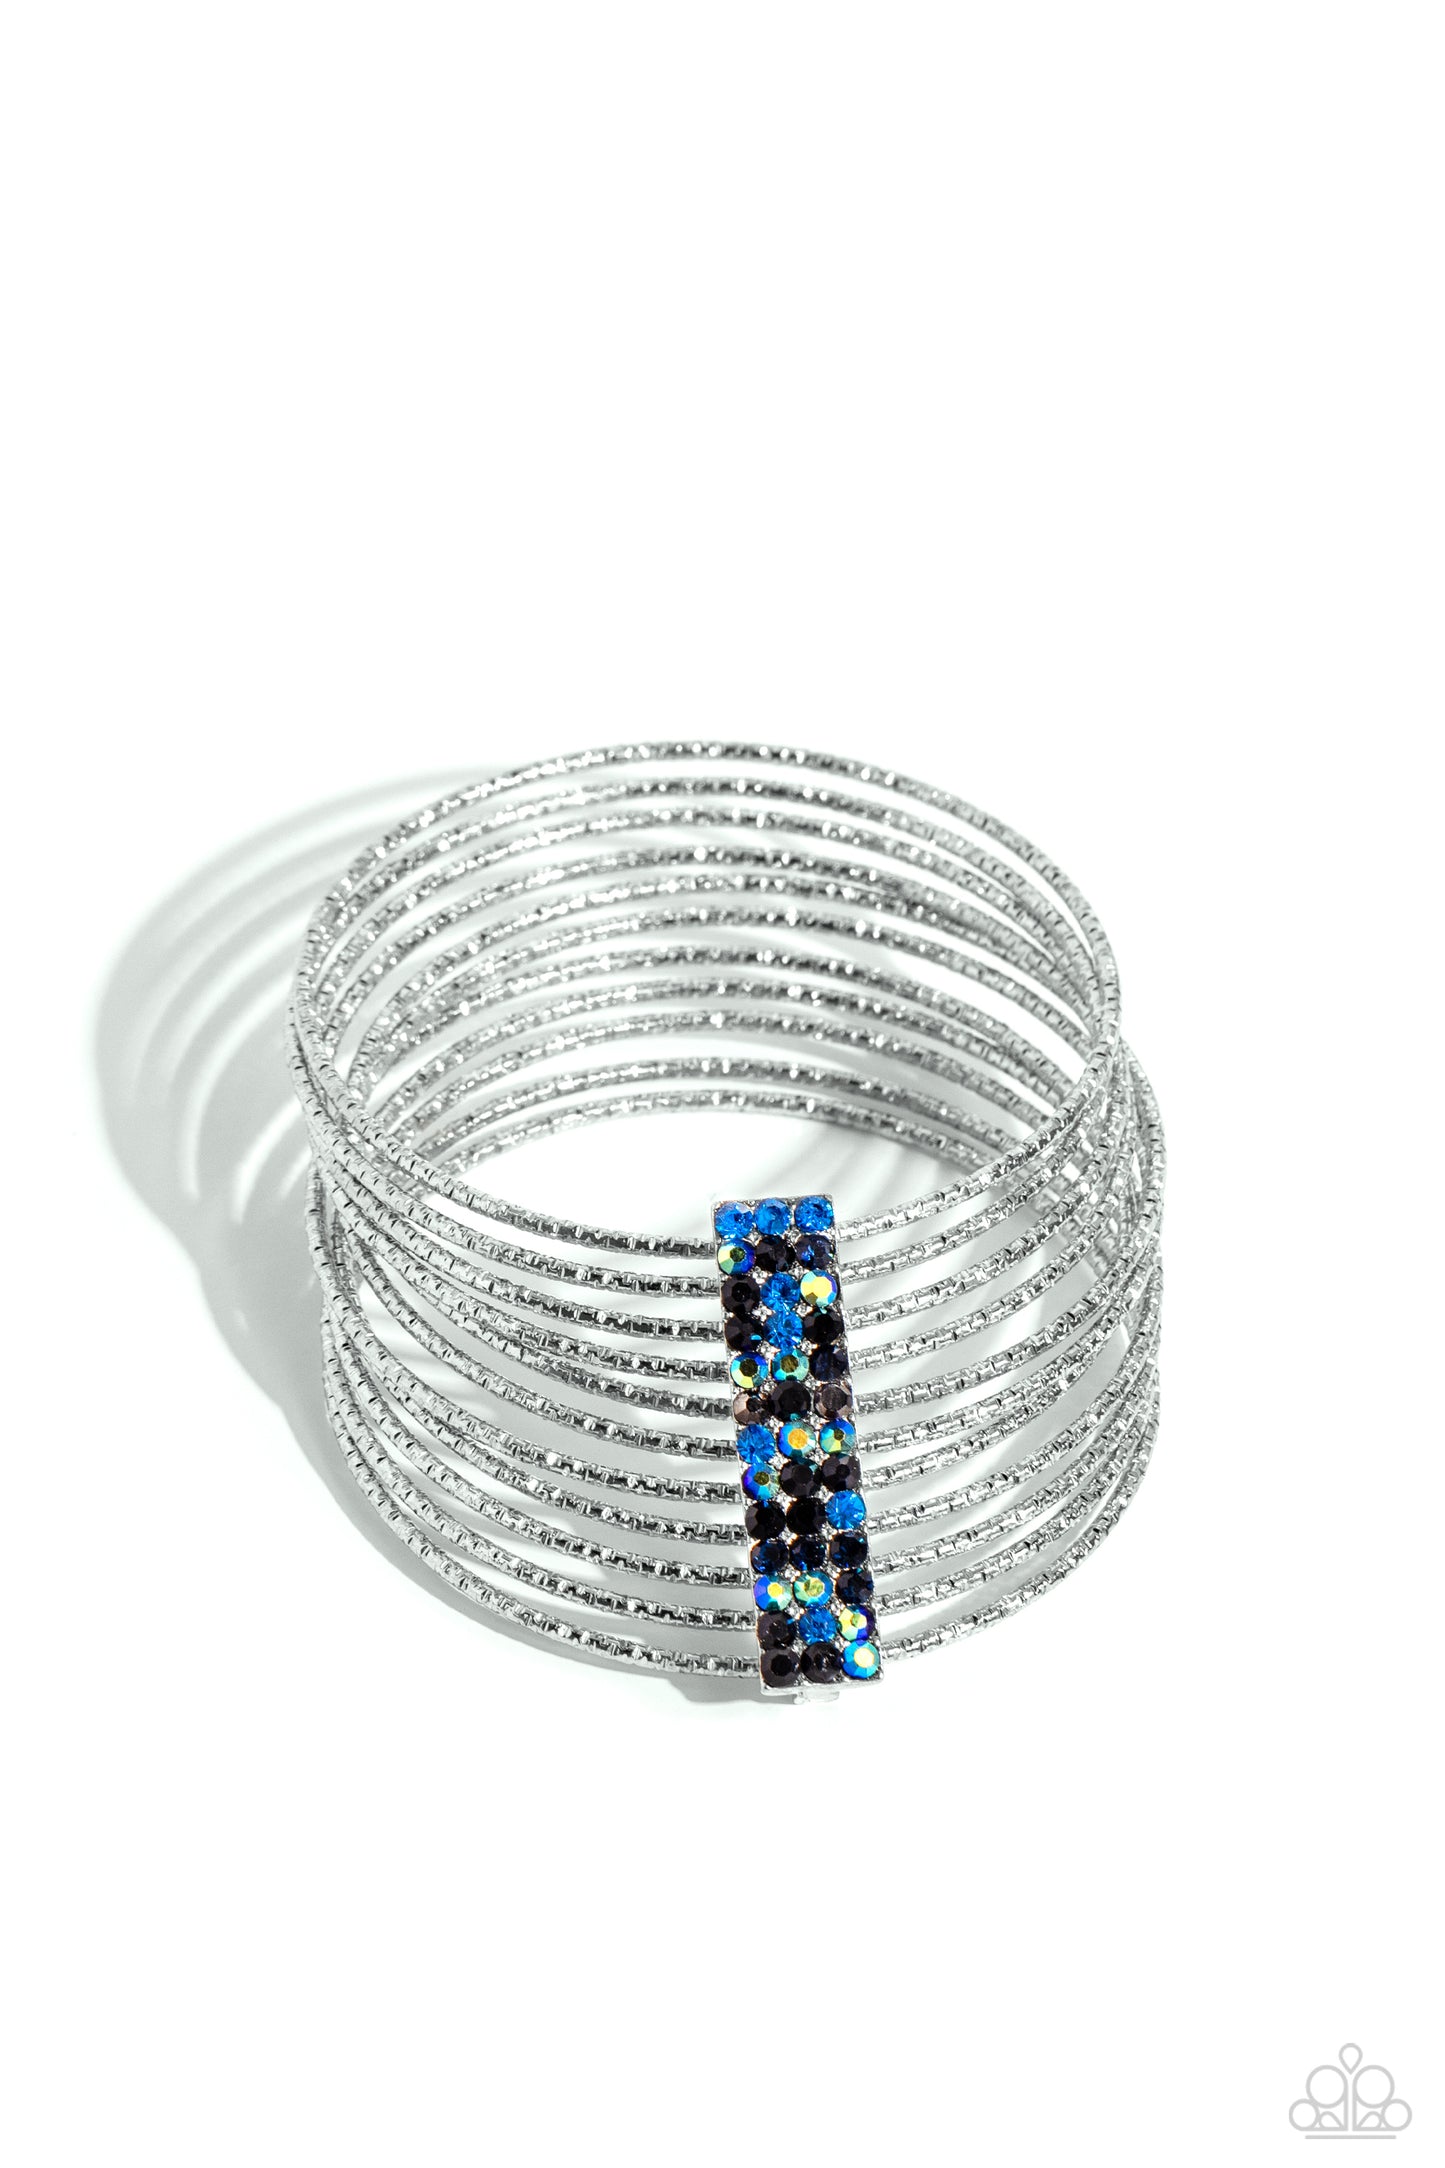 Shimmery Silhouette - multi - Paparazzi bracelet